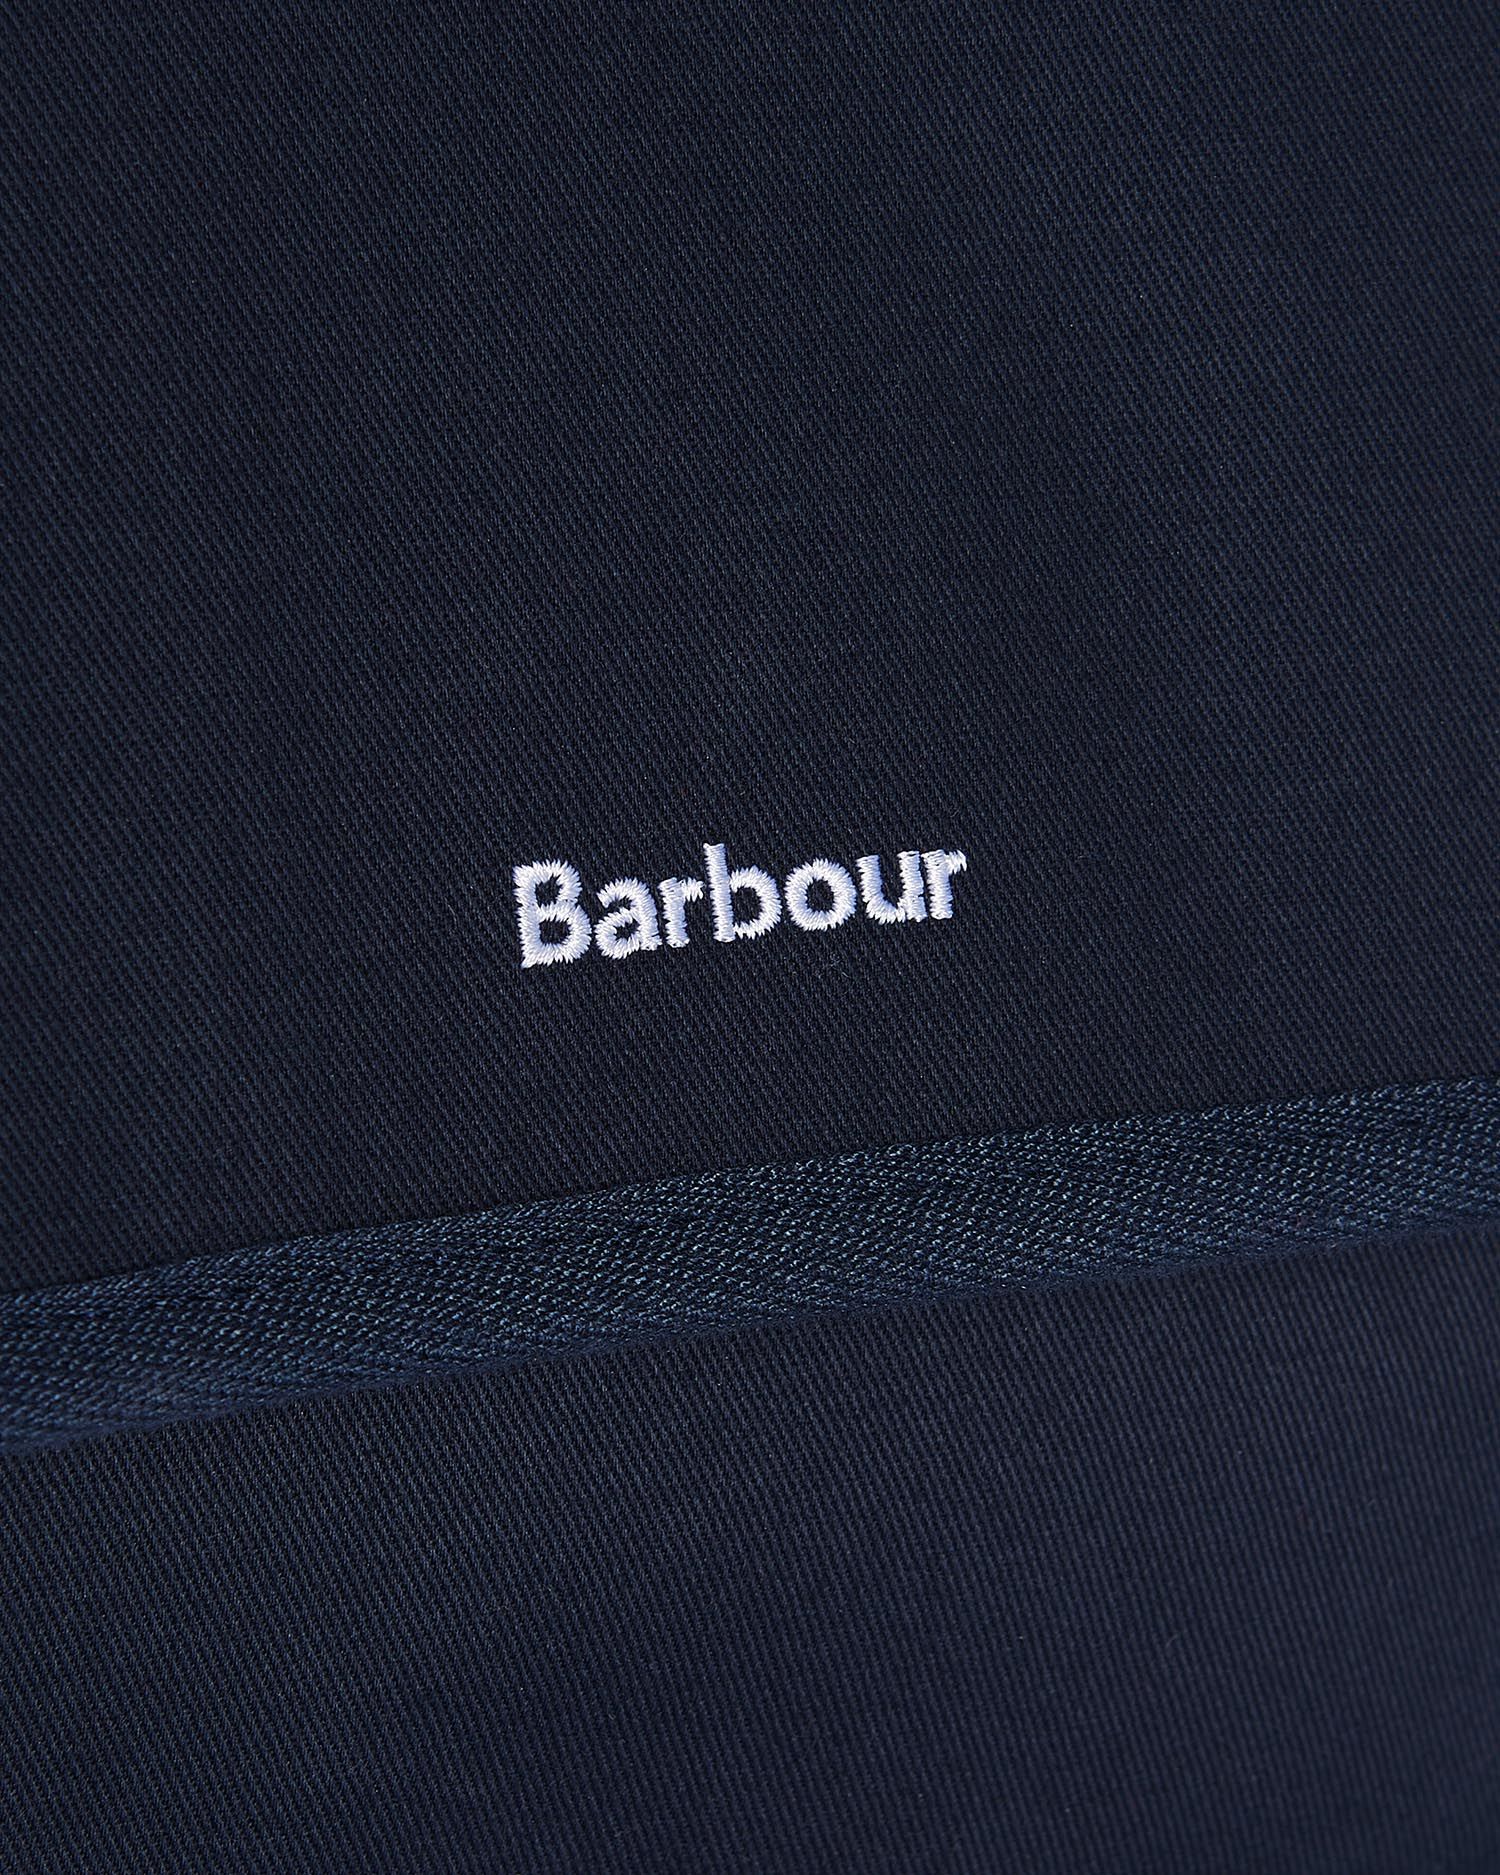 Barbour Olivia Travel Cross Body Bag - Navy